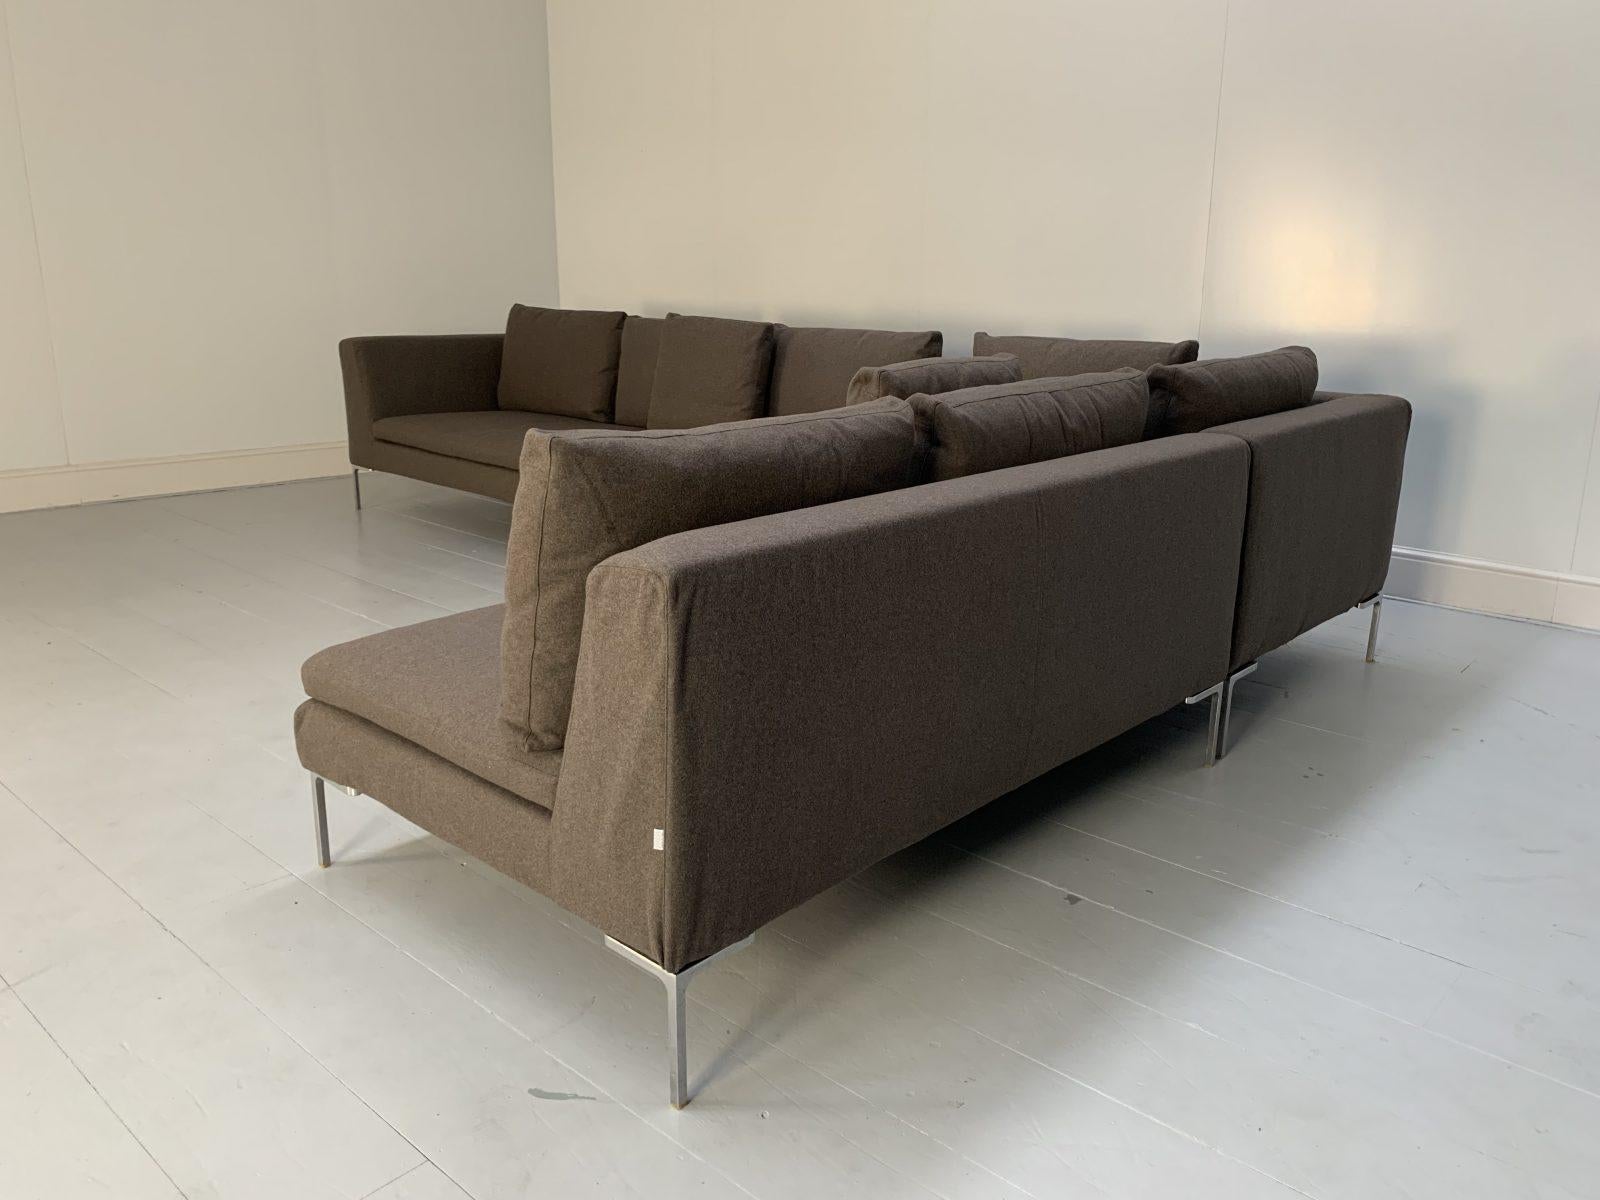 B&B Italia “Charles” L-Shape Sectional Sofa in Beige “Serra” Cashmere For Sale 1